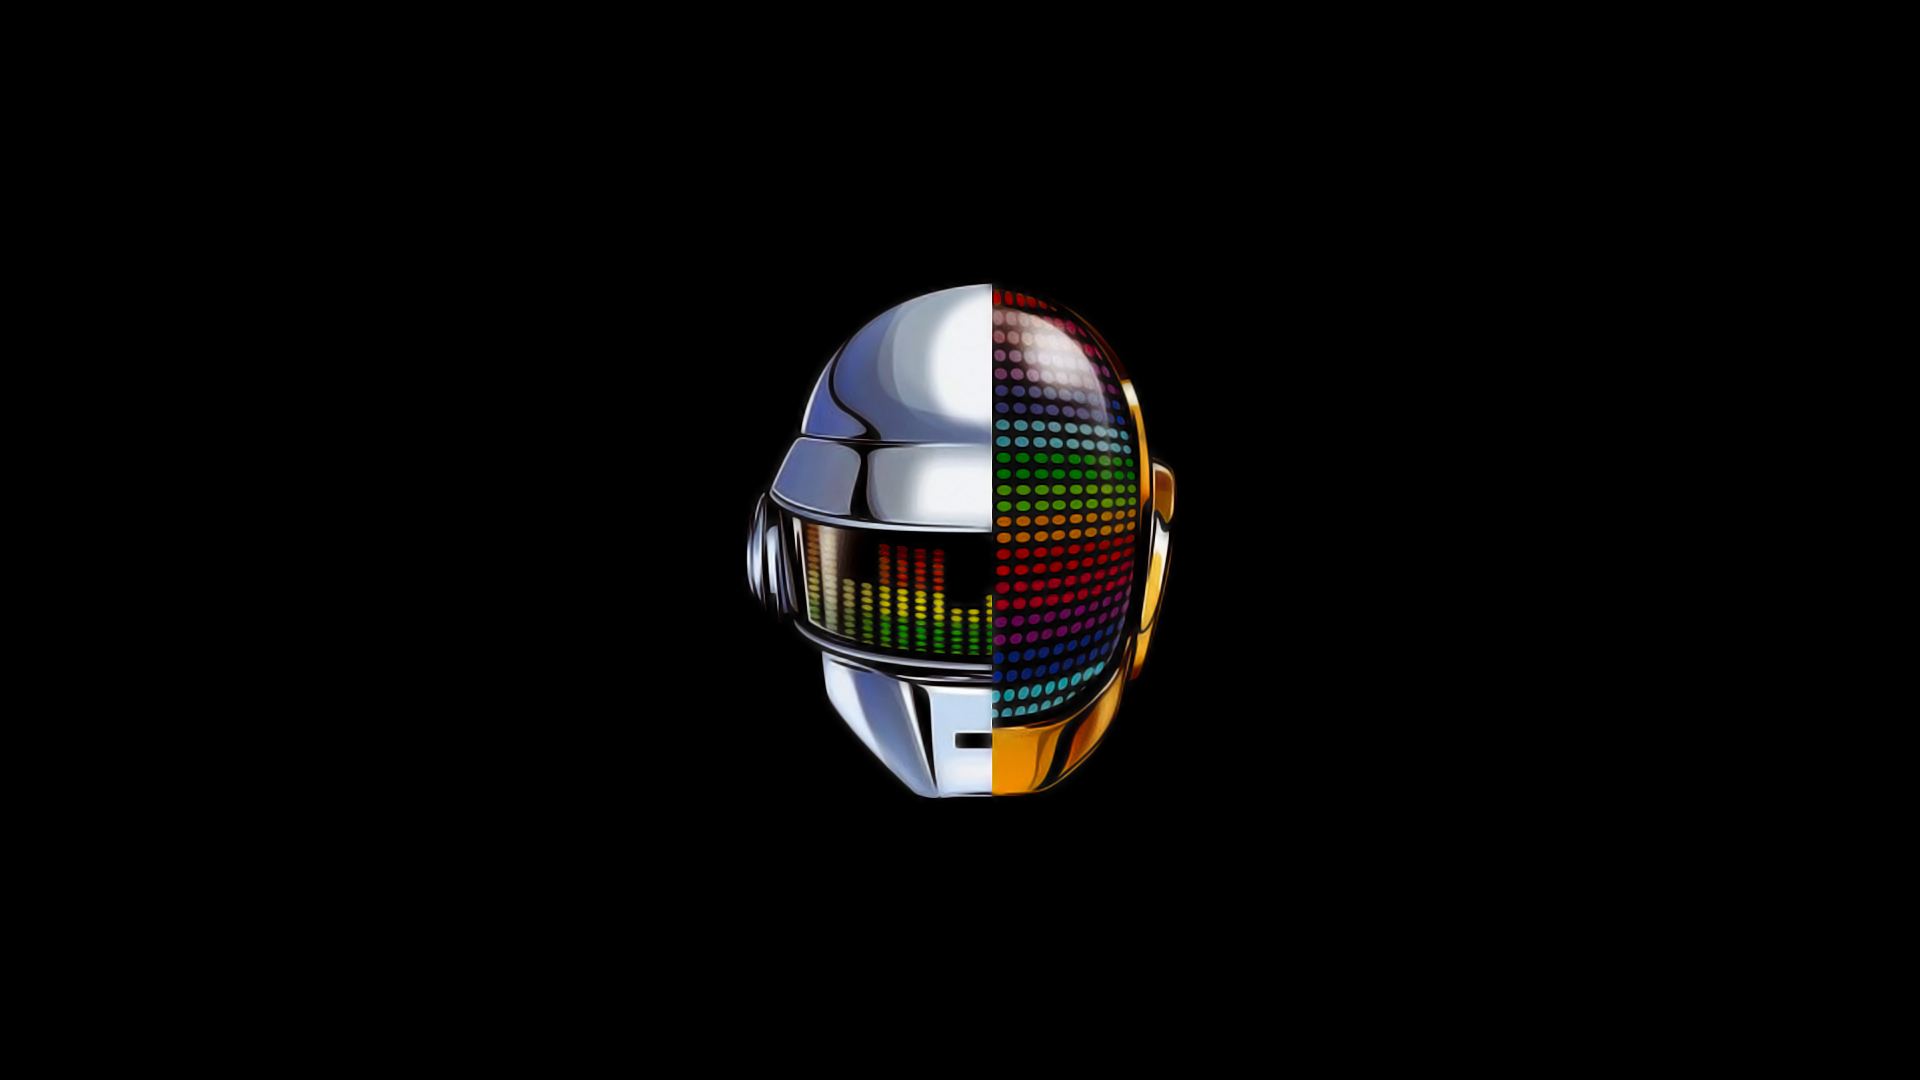 General 1920x1080 Daft Punk music robot black electronic music helmet minimalism simple background black background artwork musician